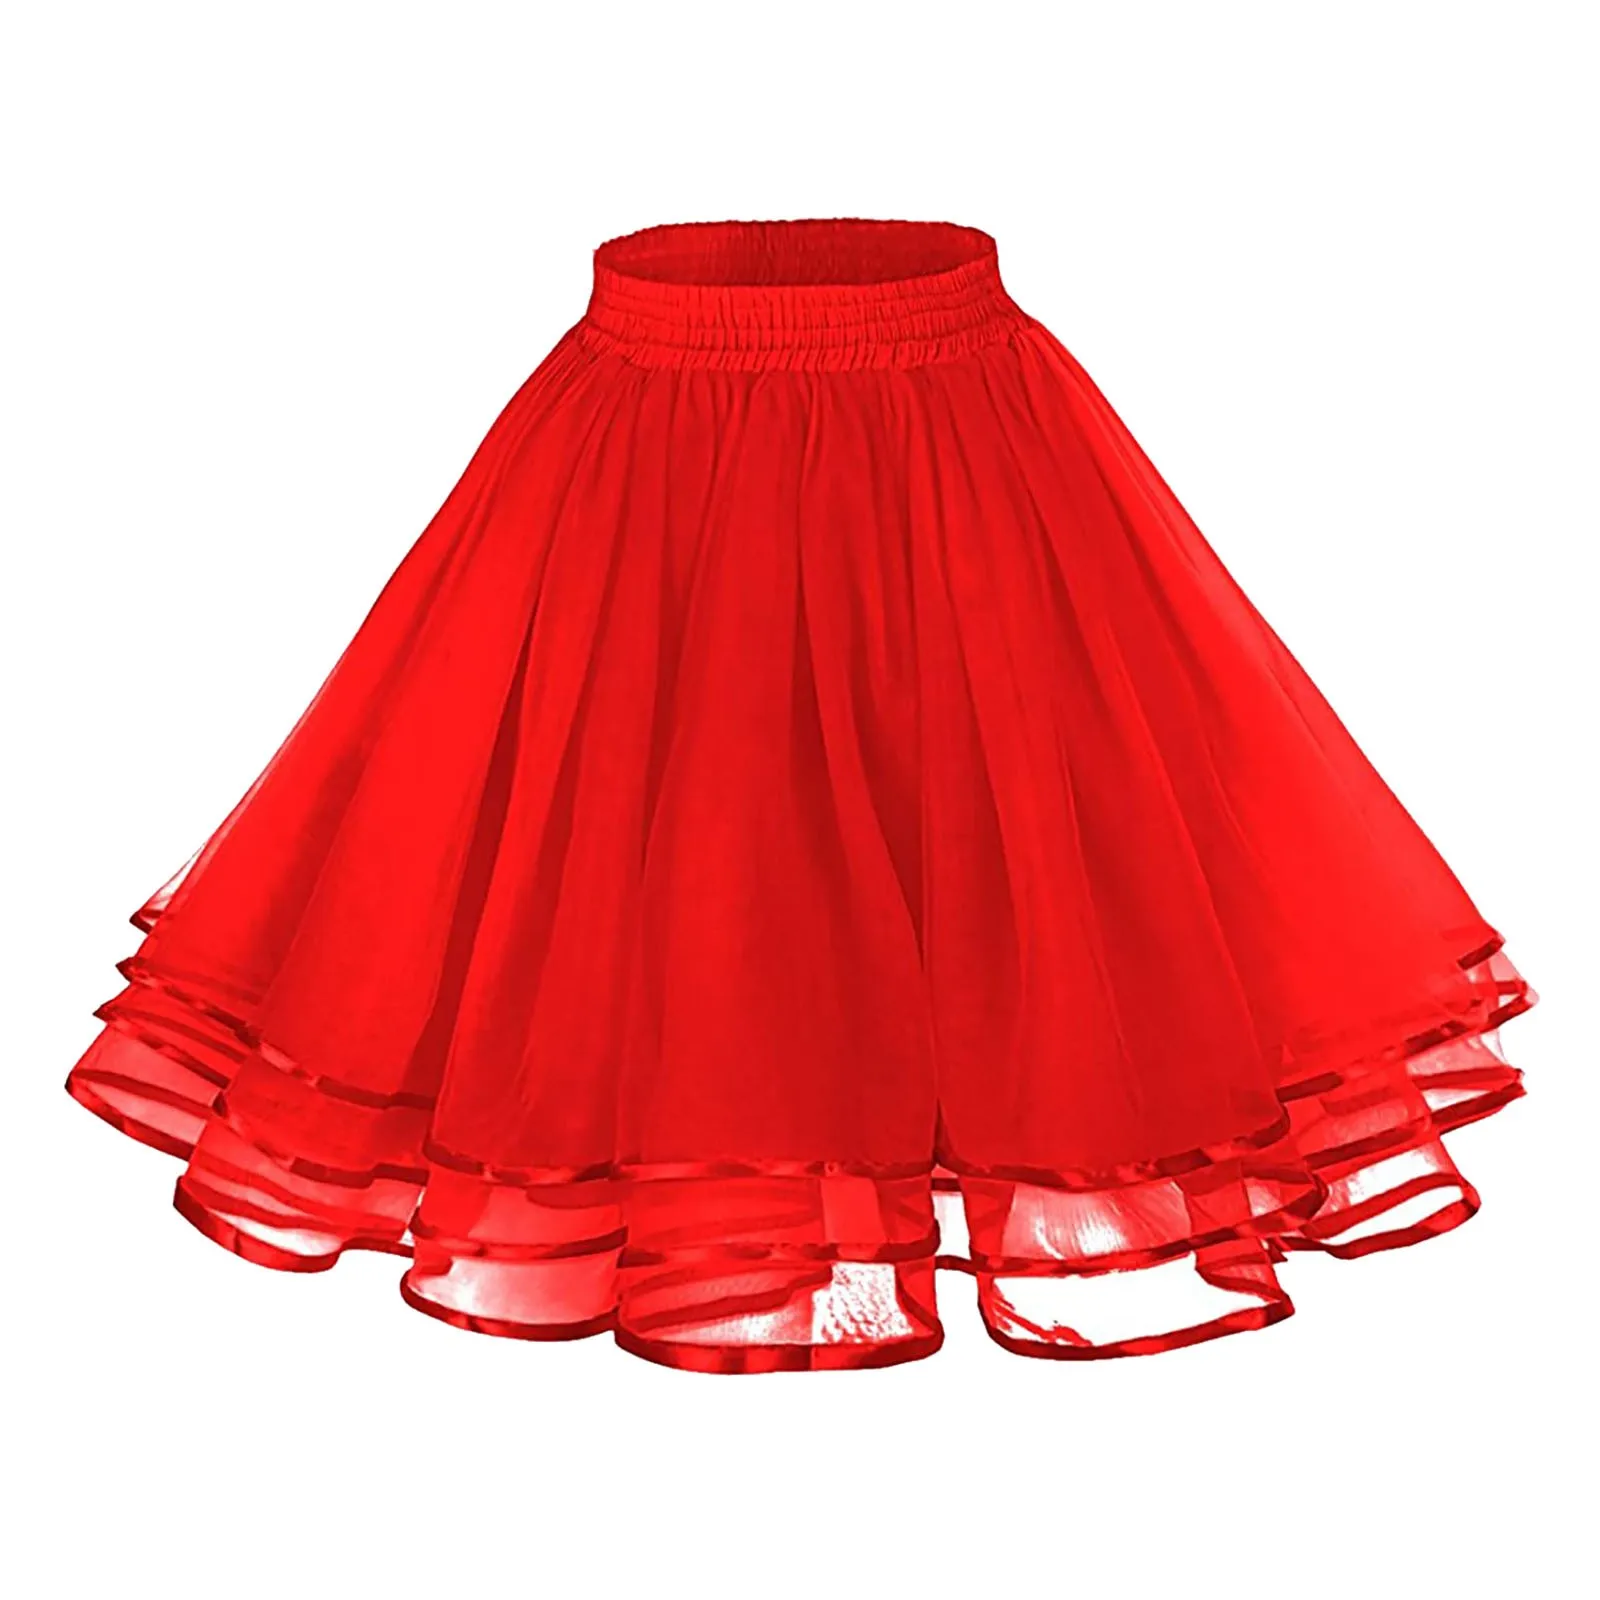 

Women Swing Tutu Princess Skirt Layered Tulle Ballet Dance Pettiskirts Hippy Cosplay Cute Party Puffy Skirt Petticoat Underskirt